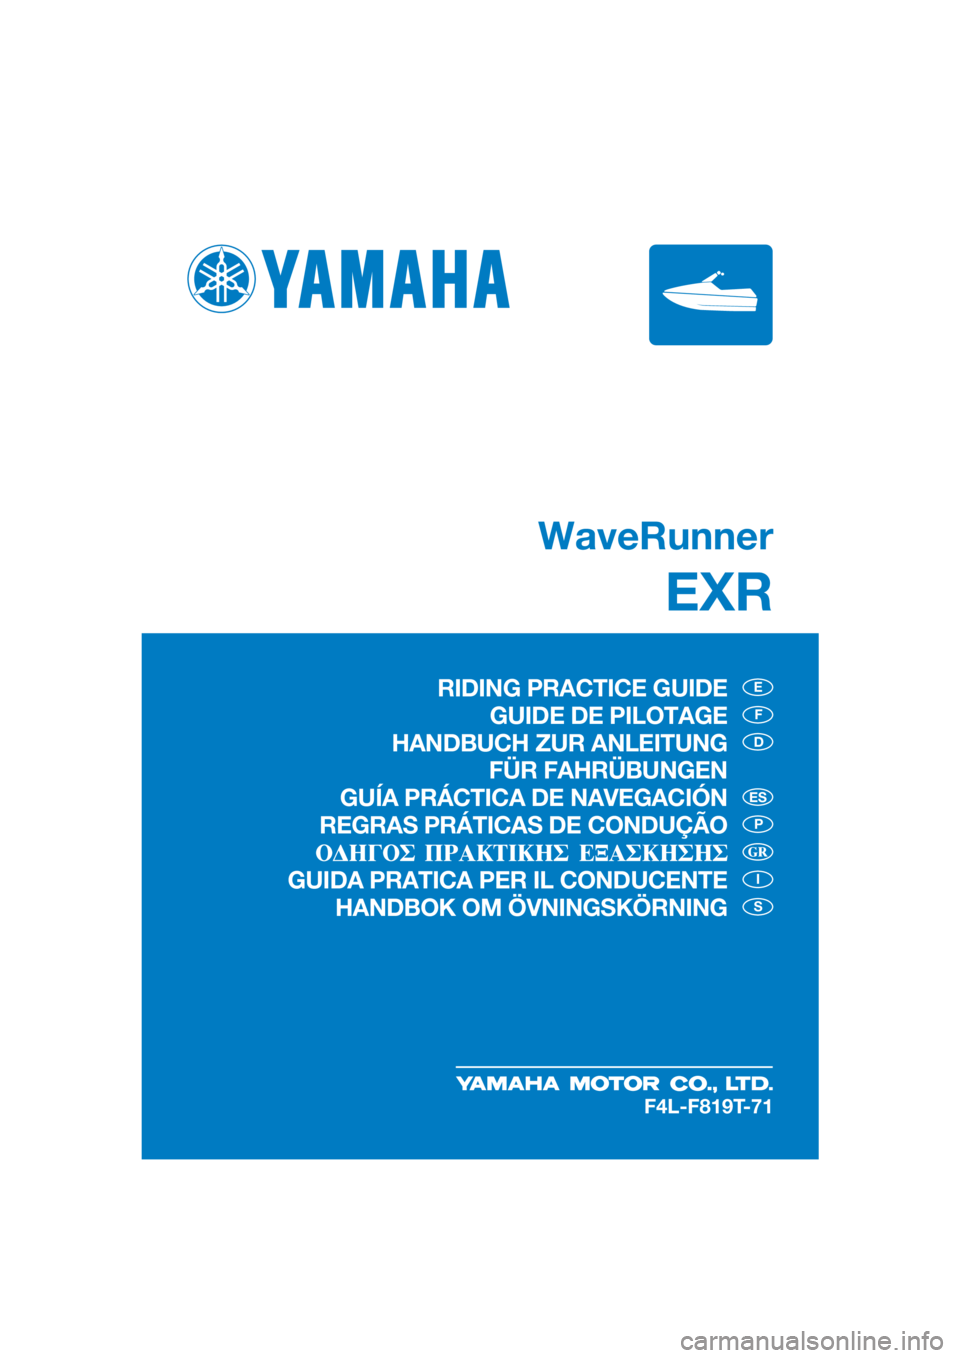 YAMAHA FJR1300 2020  Manuale de Empleo (in Spanish) WaveRunner
EXR
E
F
D
P
I
S
ES
F4L-F819T-71
RIDING PRACTICE GUIDE
GUIDE DE PILOTAGE
HANDBUCH ZUR ANLEITUNG
 FÜR FAHRÜBUNGEN
GUÍA PRÁCTICA DE NAVEGACIÓN
REGRAS PRÁTICAS DE CONDUÇÃO
GUIDA PRATICA